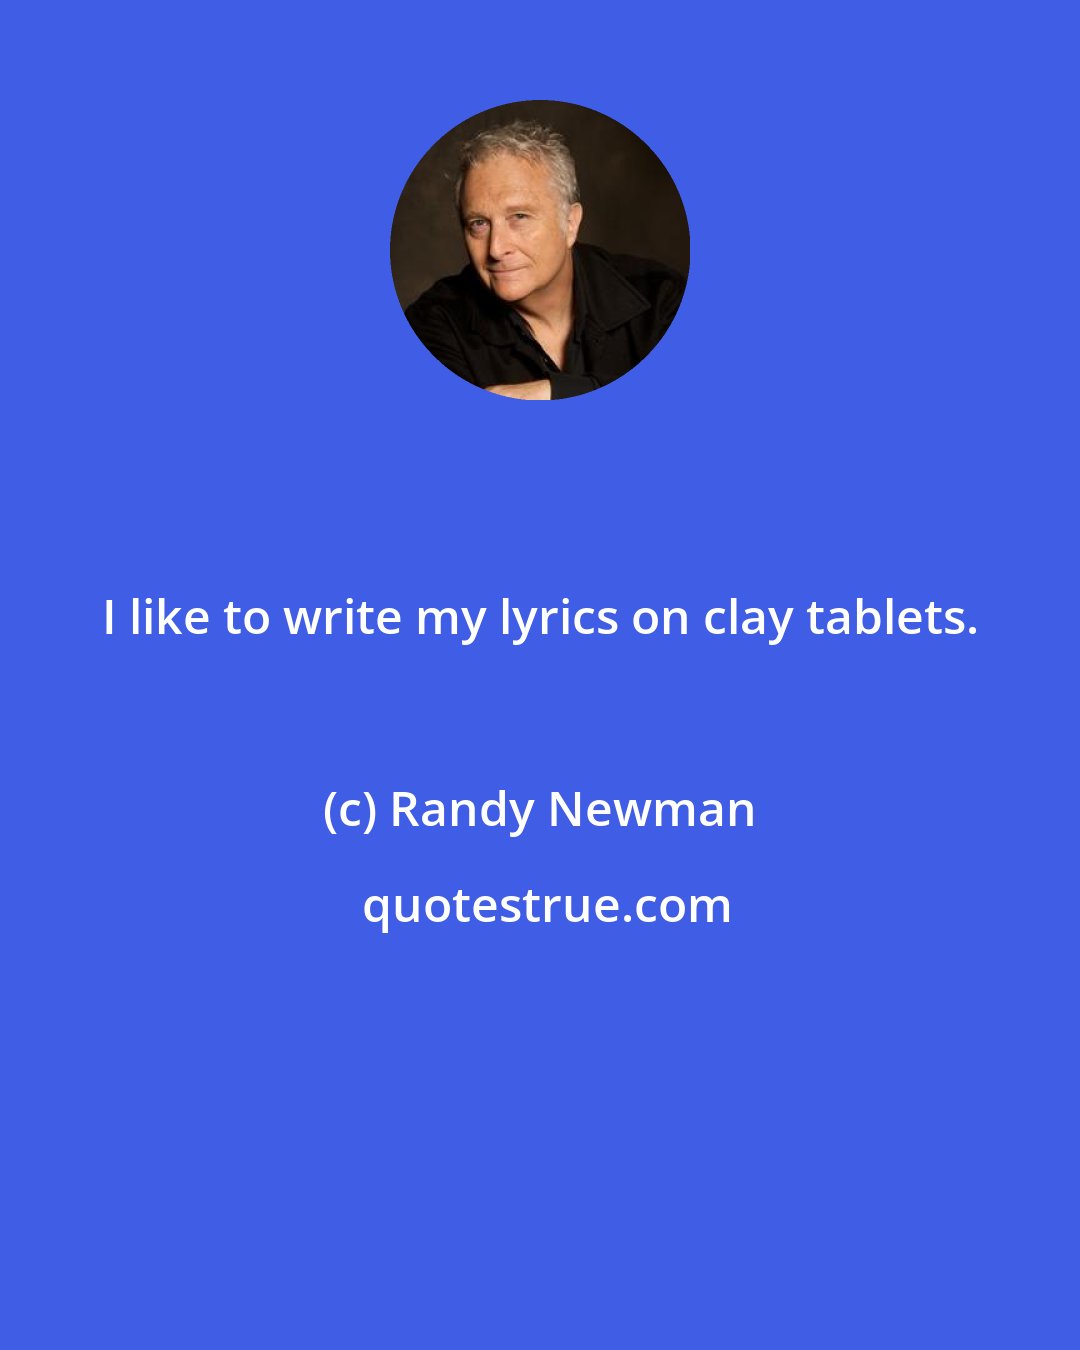 Randy Newman: I like to write my lyrics on clay tablets.